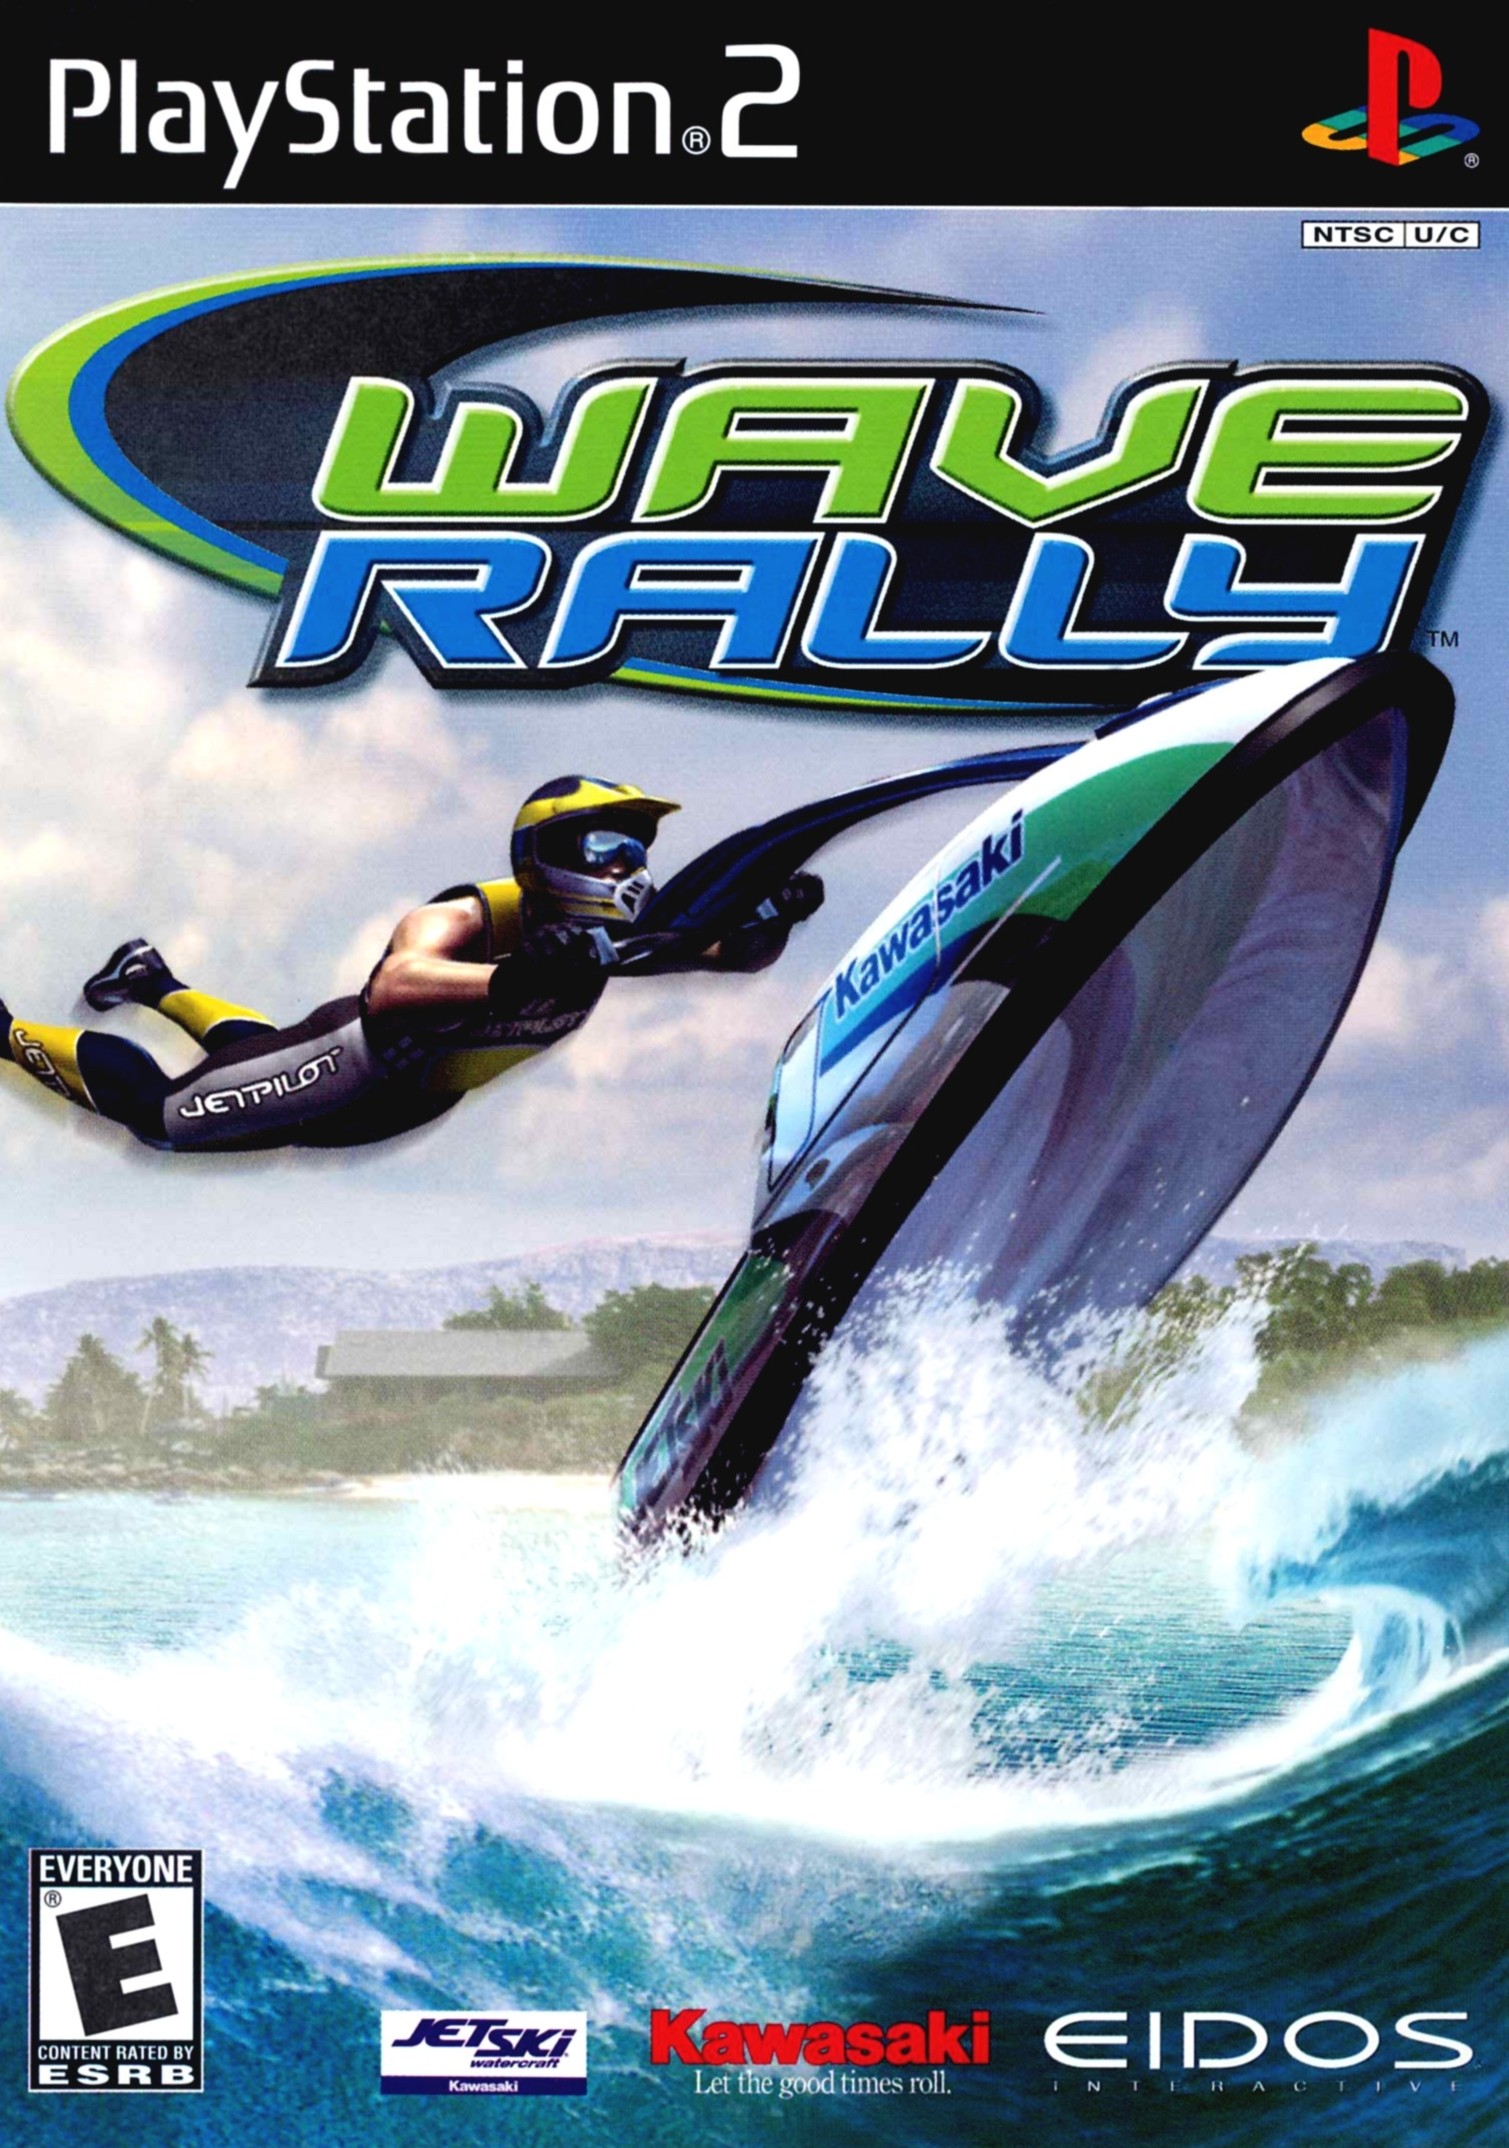 'Wave Rally'